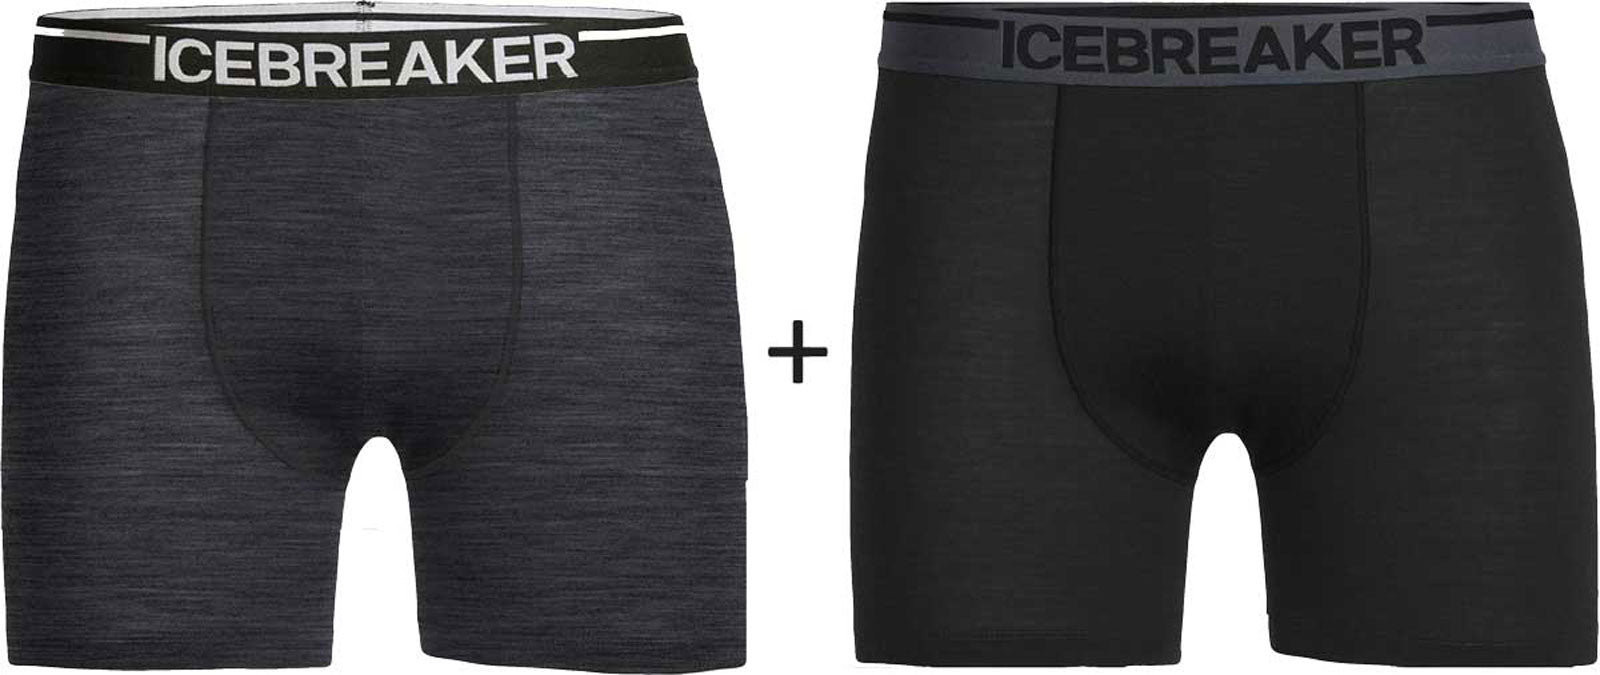 Men's Icebreaker "Anatomica" Boxer Briefs TWIN PACK {IC-103029-TWIN}